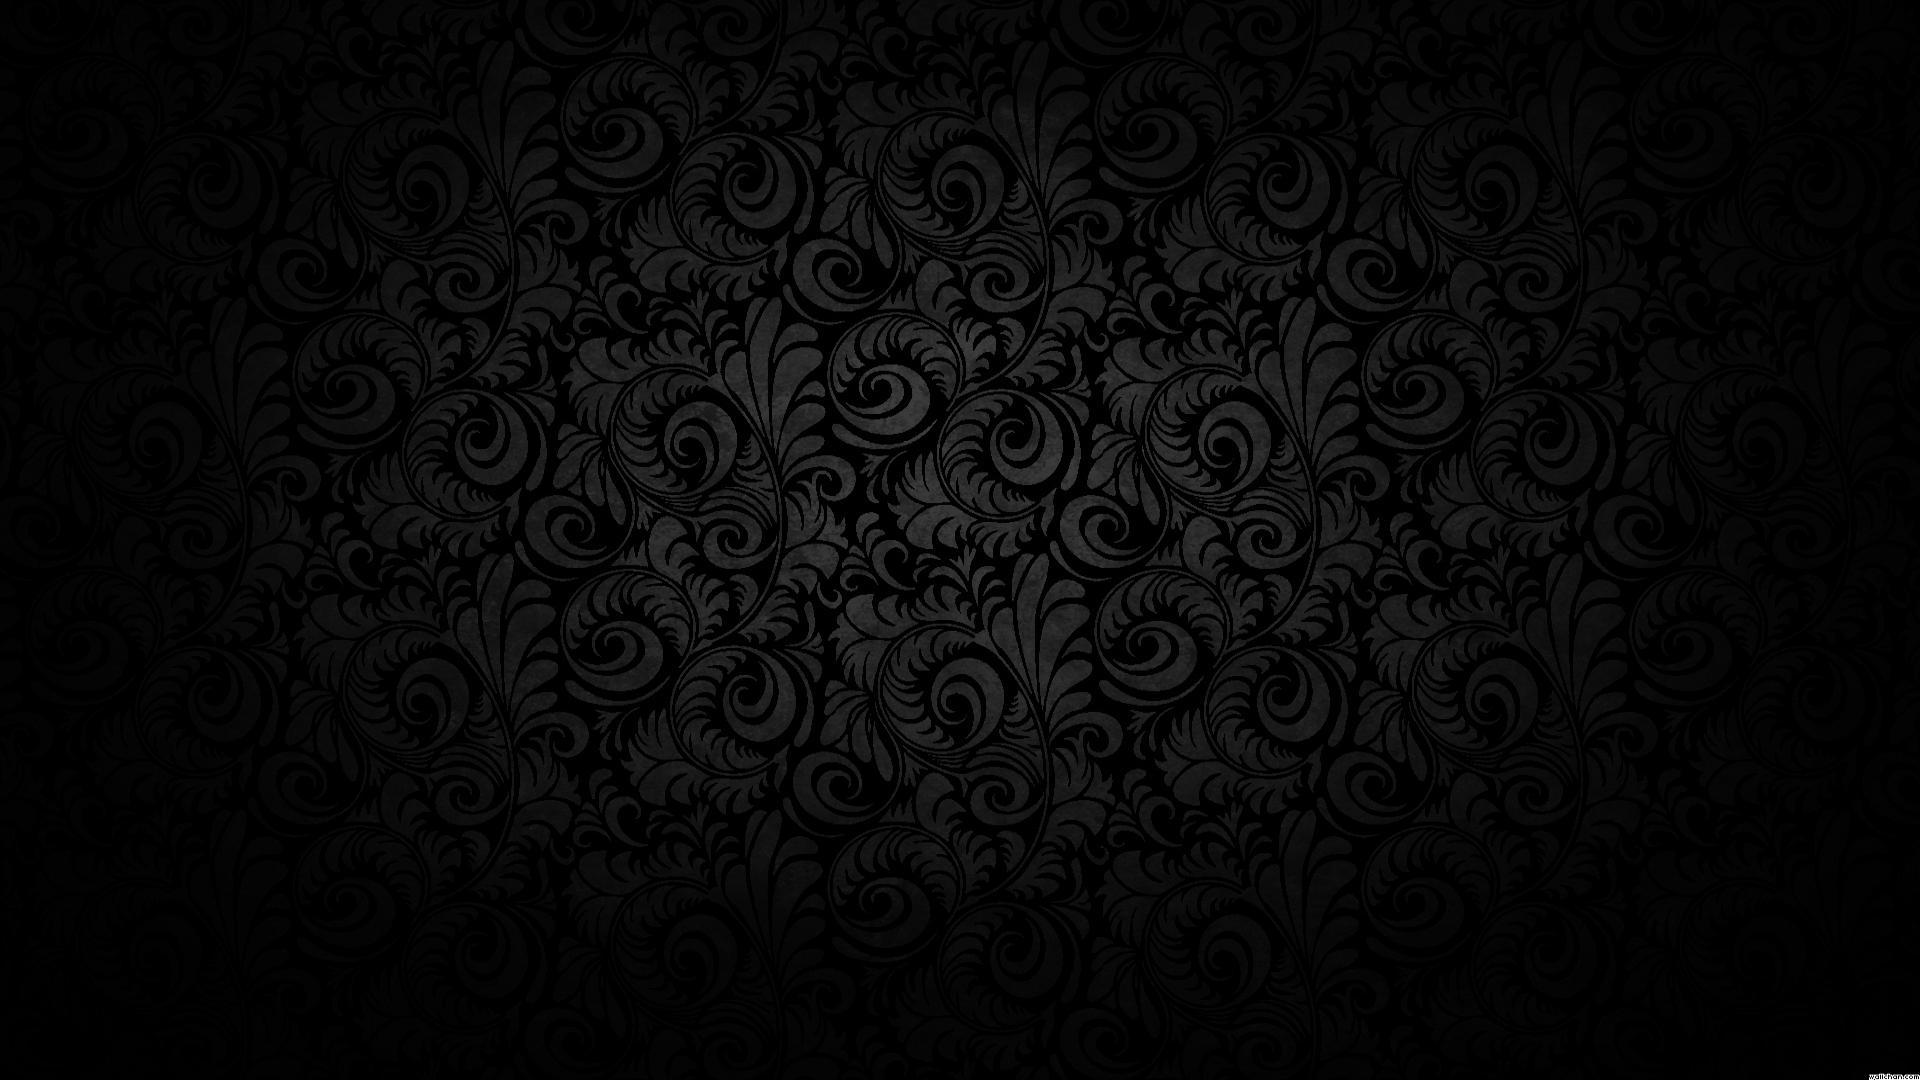 Black HD Wallpaper 1920x1080. (62++ Wallpaper)